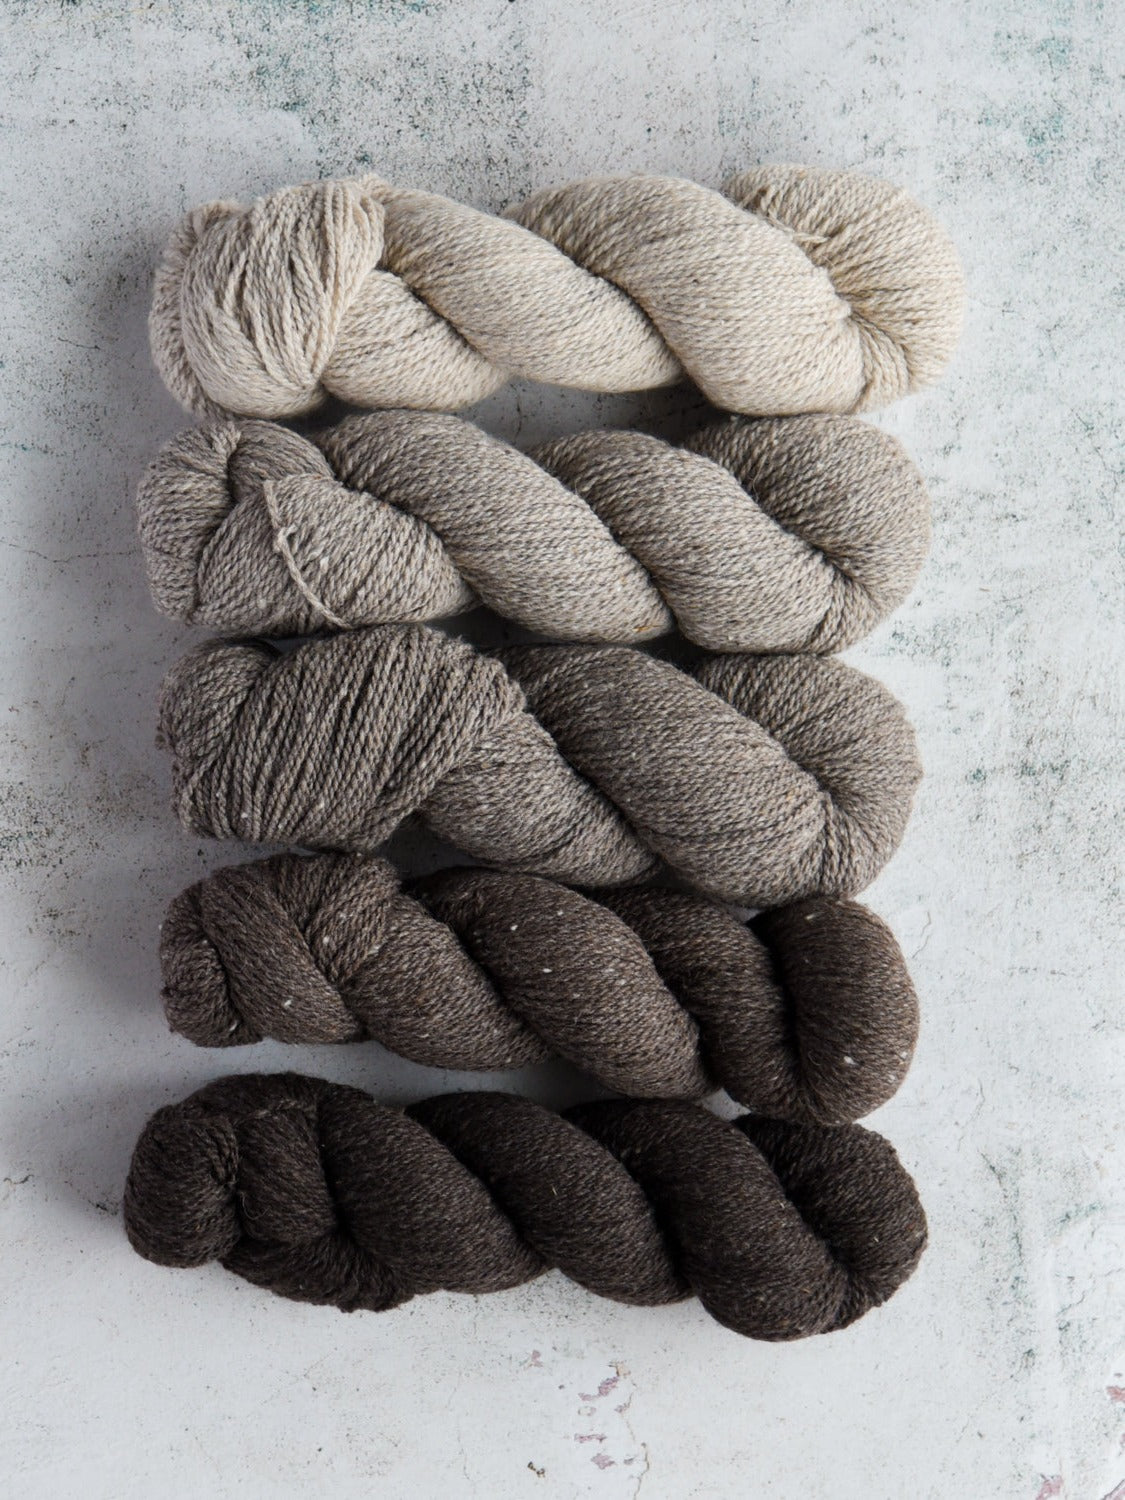 Handspun yarn, Natural color wool / alpaca / bamboo, DK weight